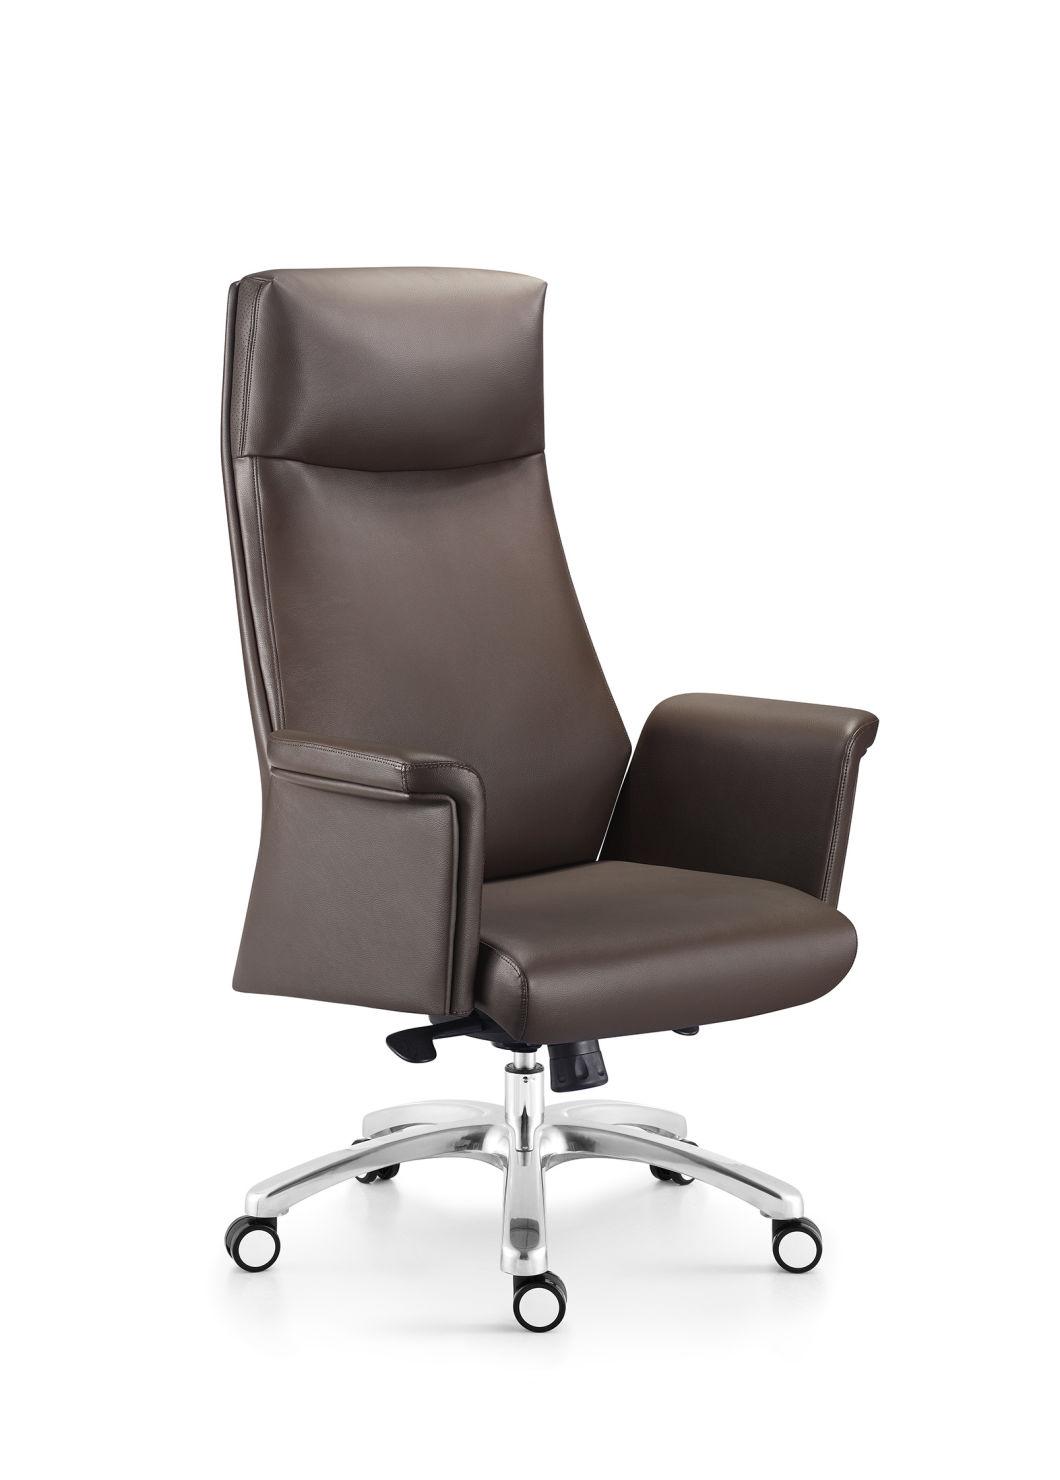 High Quality Swivel High Back Executive Ergonomic Office Chair